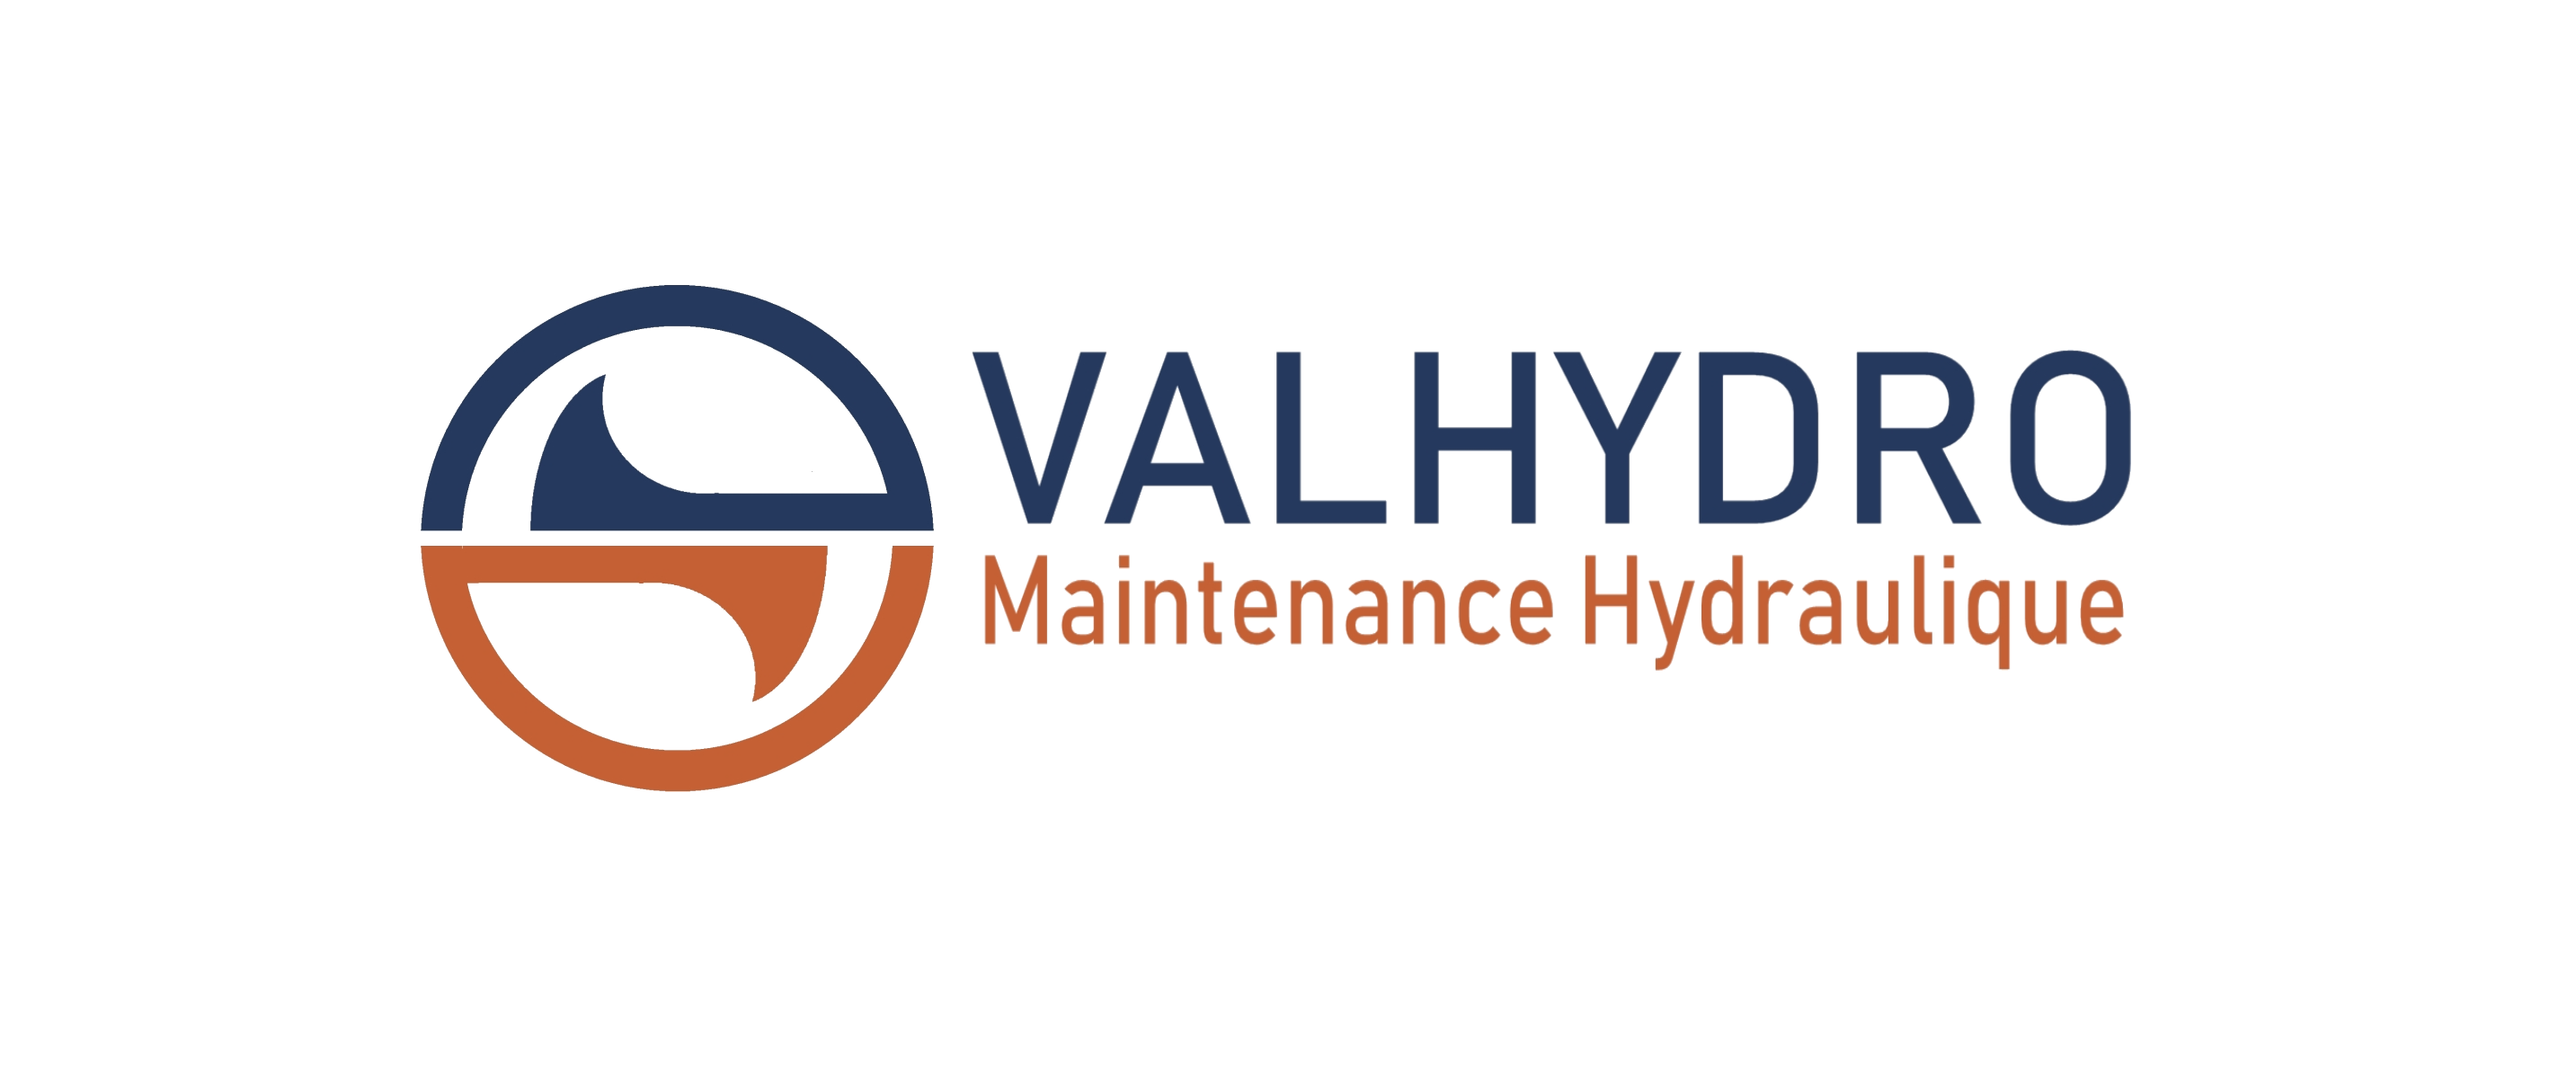 Valhydro - Maintenance hydraulique